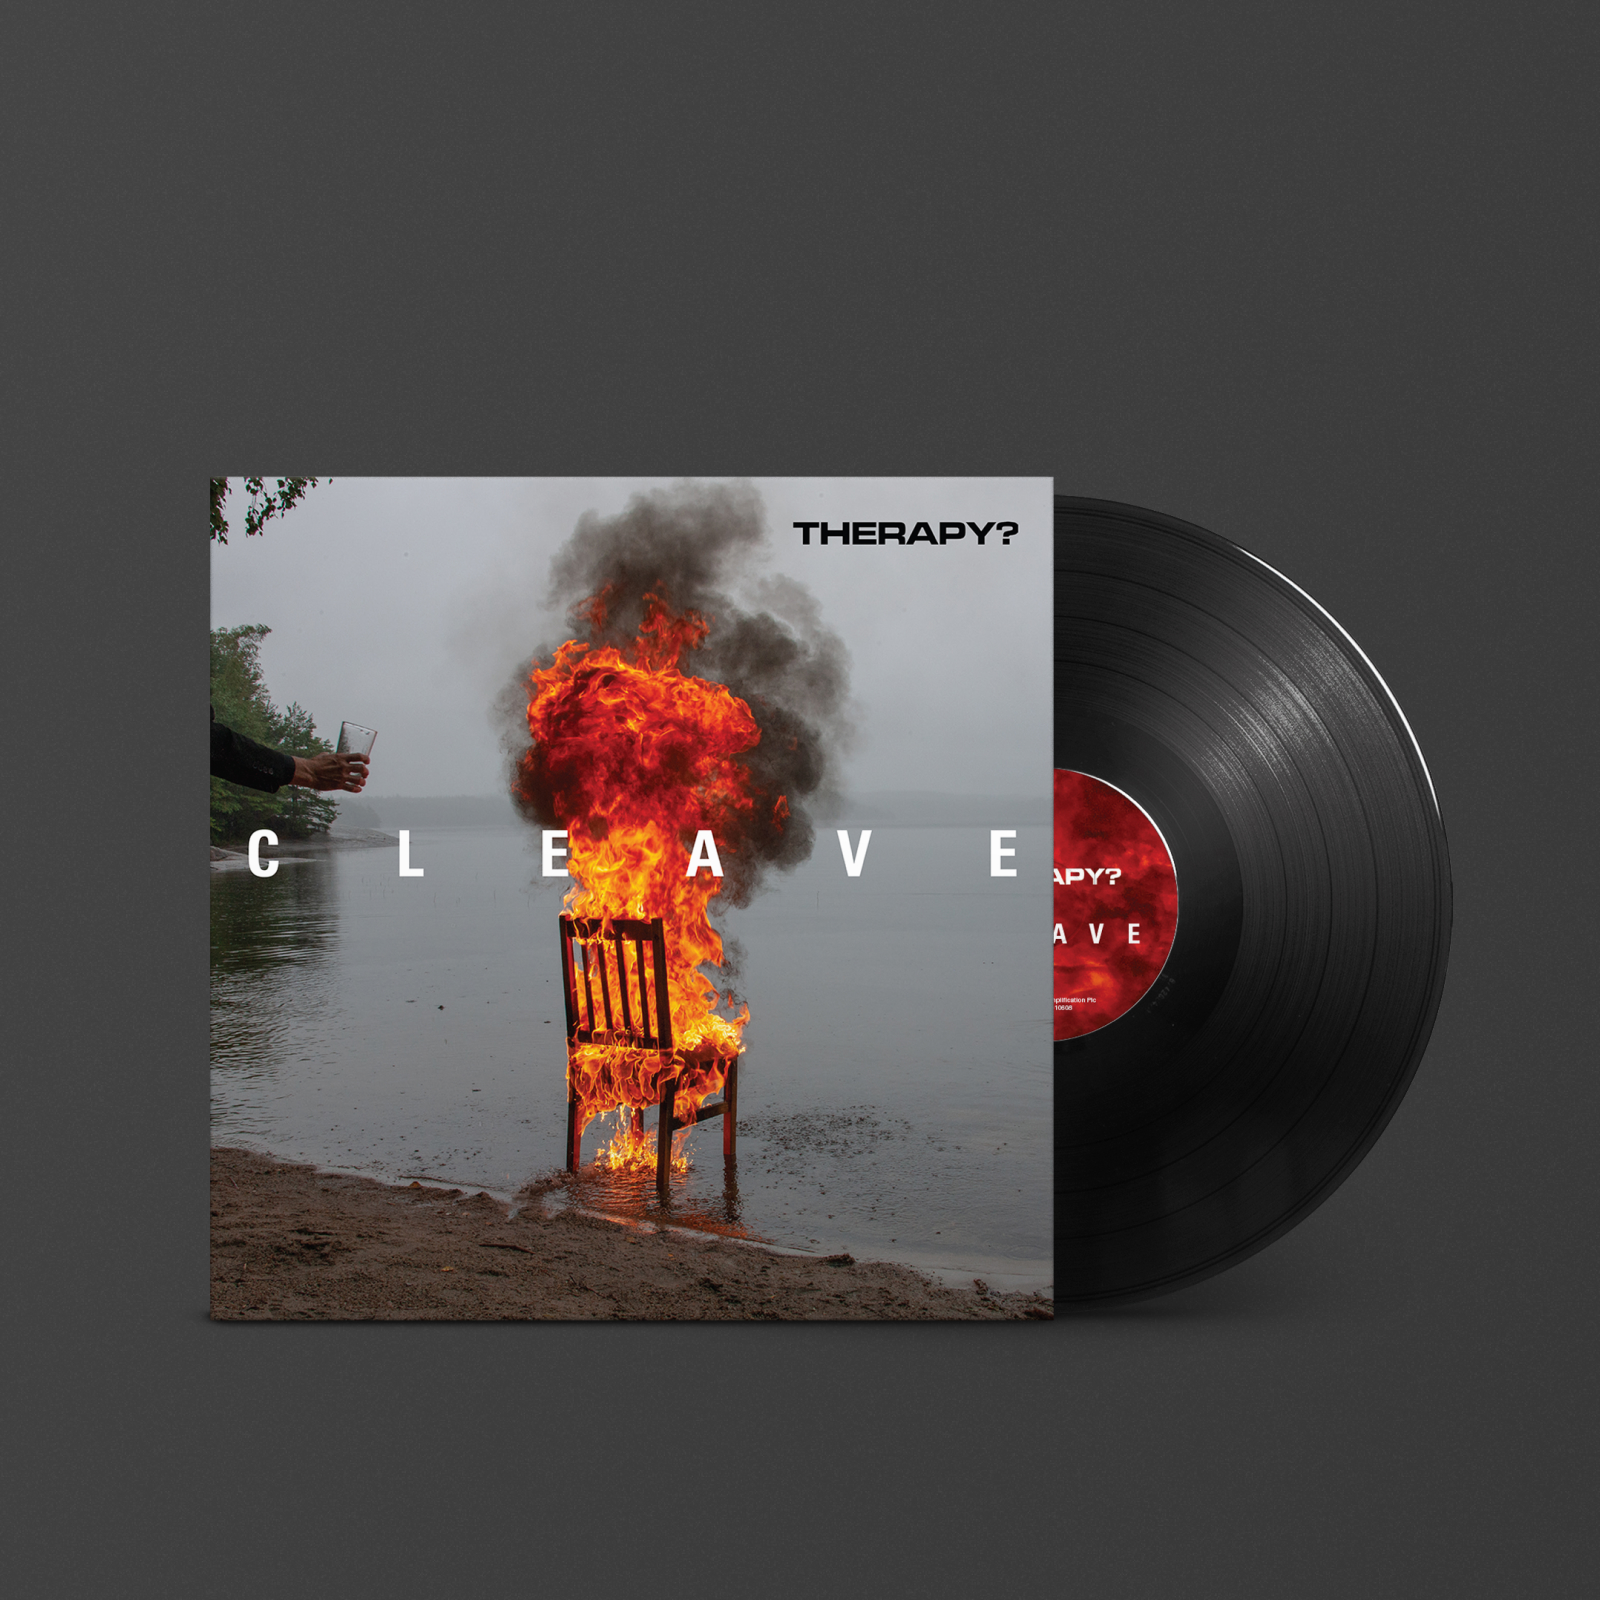 La portada de vinilo del LP Cleave Therapy? de Marshall.